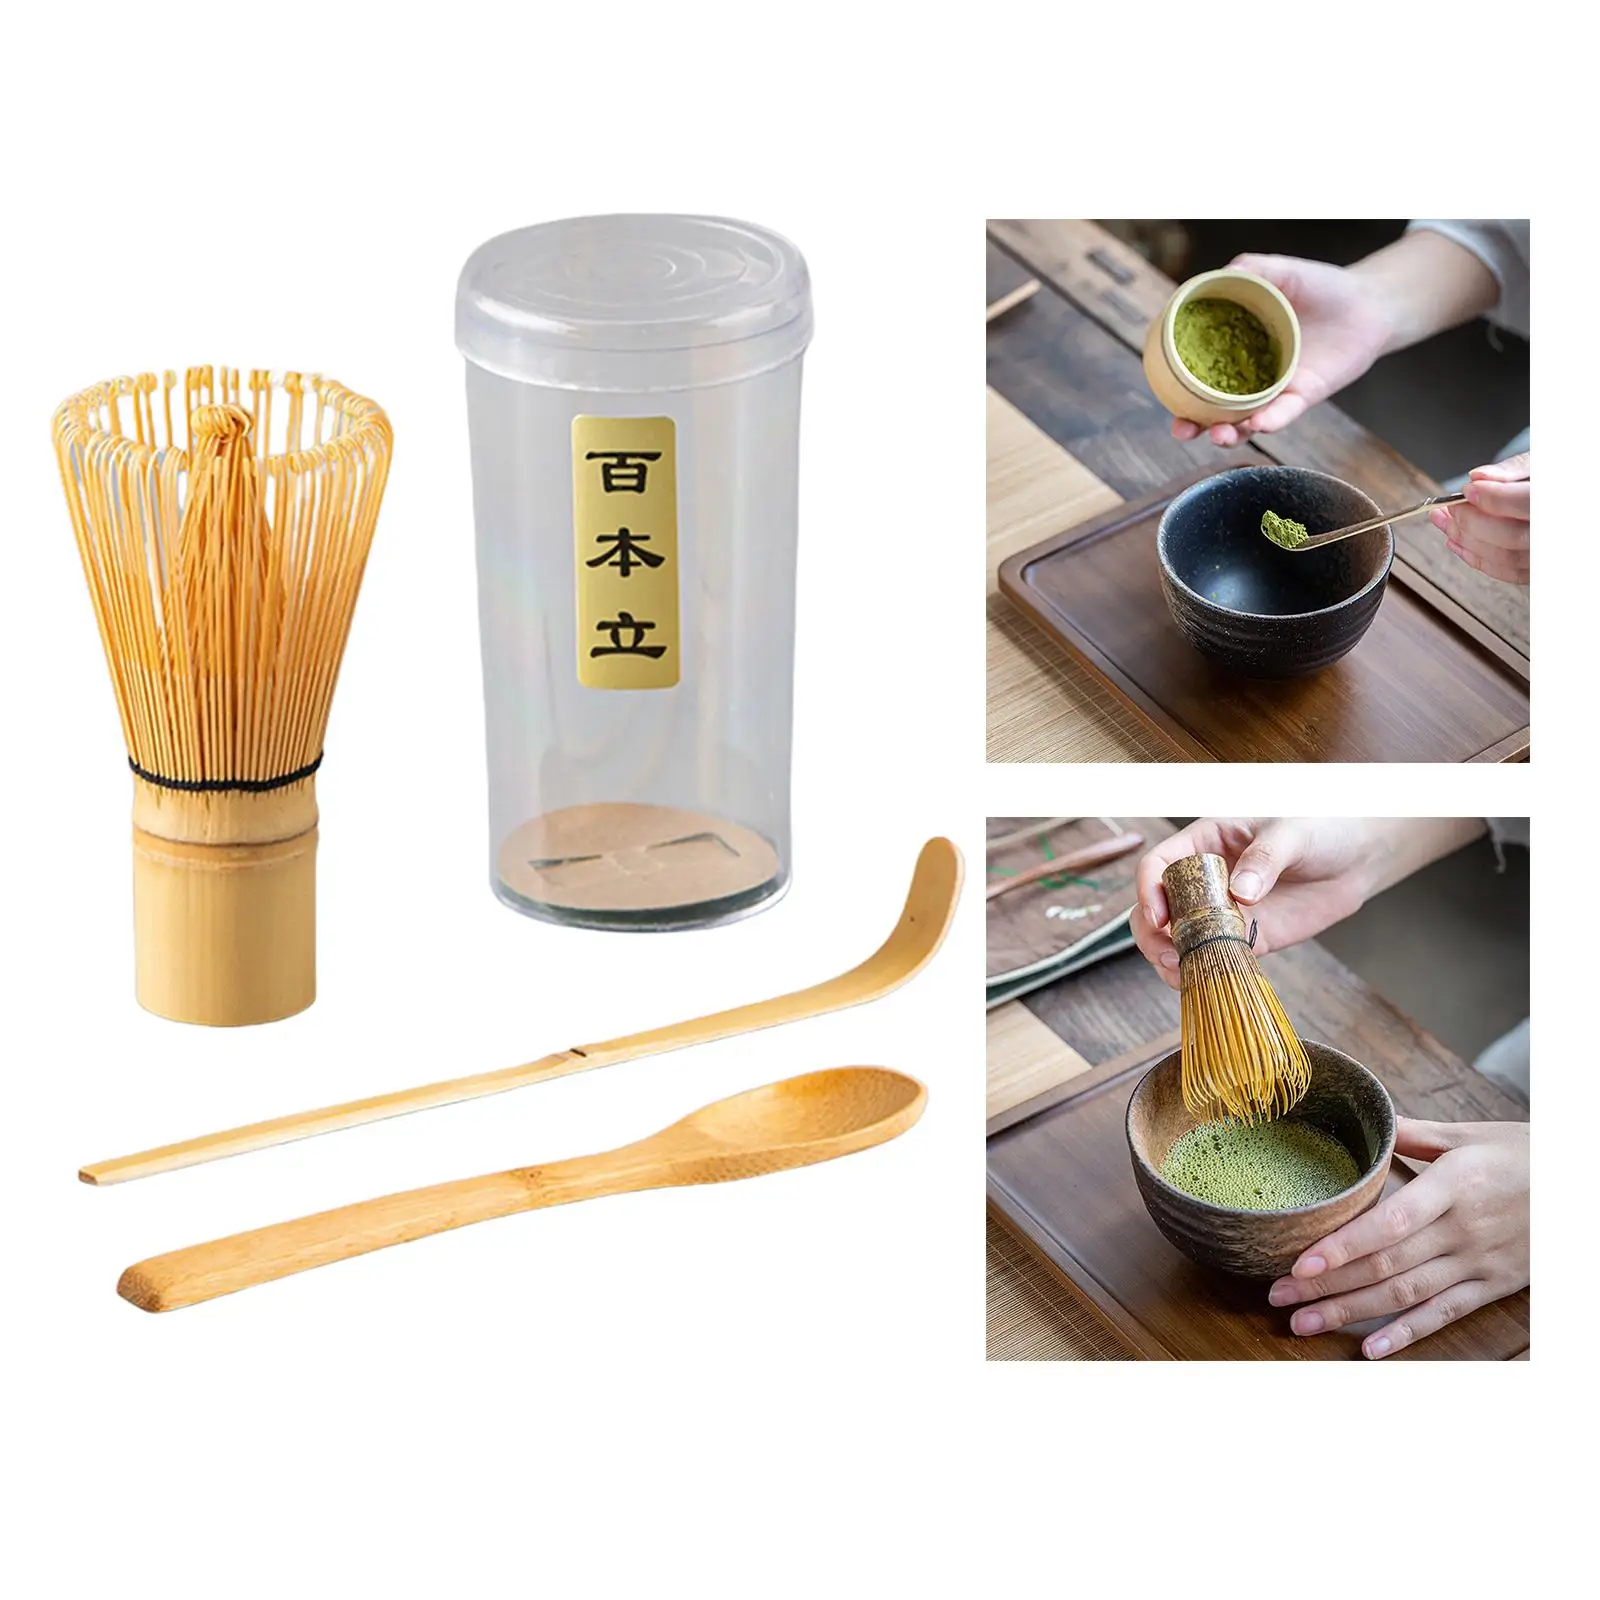 Bamboo Matcha  Prepare A Traditional Cup of Matcha Bamboo Whisk & Holder Handmade Traditional Bamboo Matcha Set for Matcha